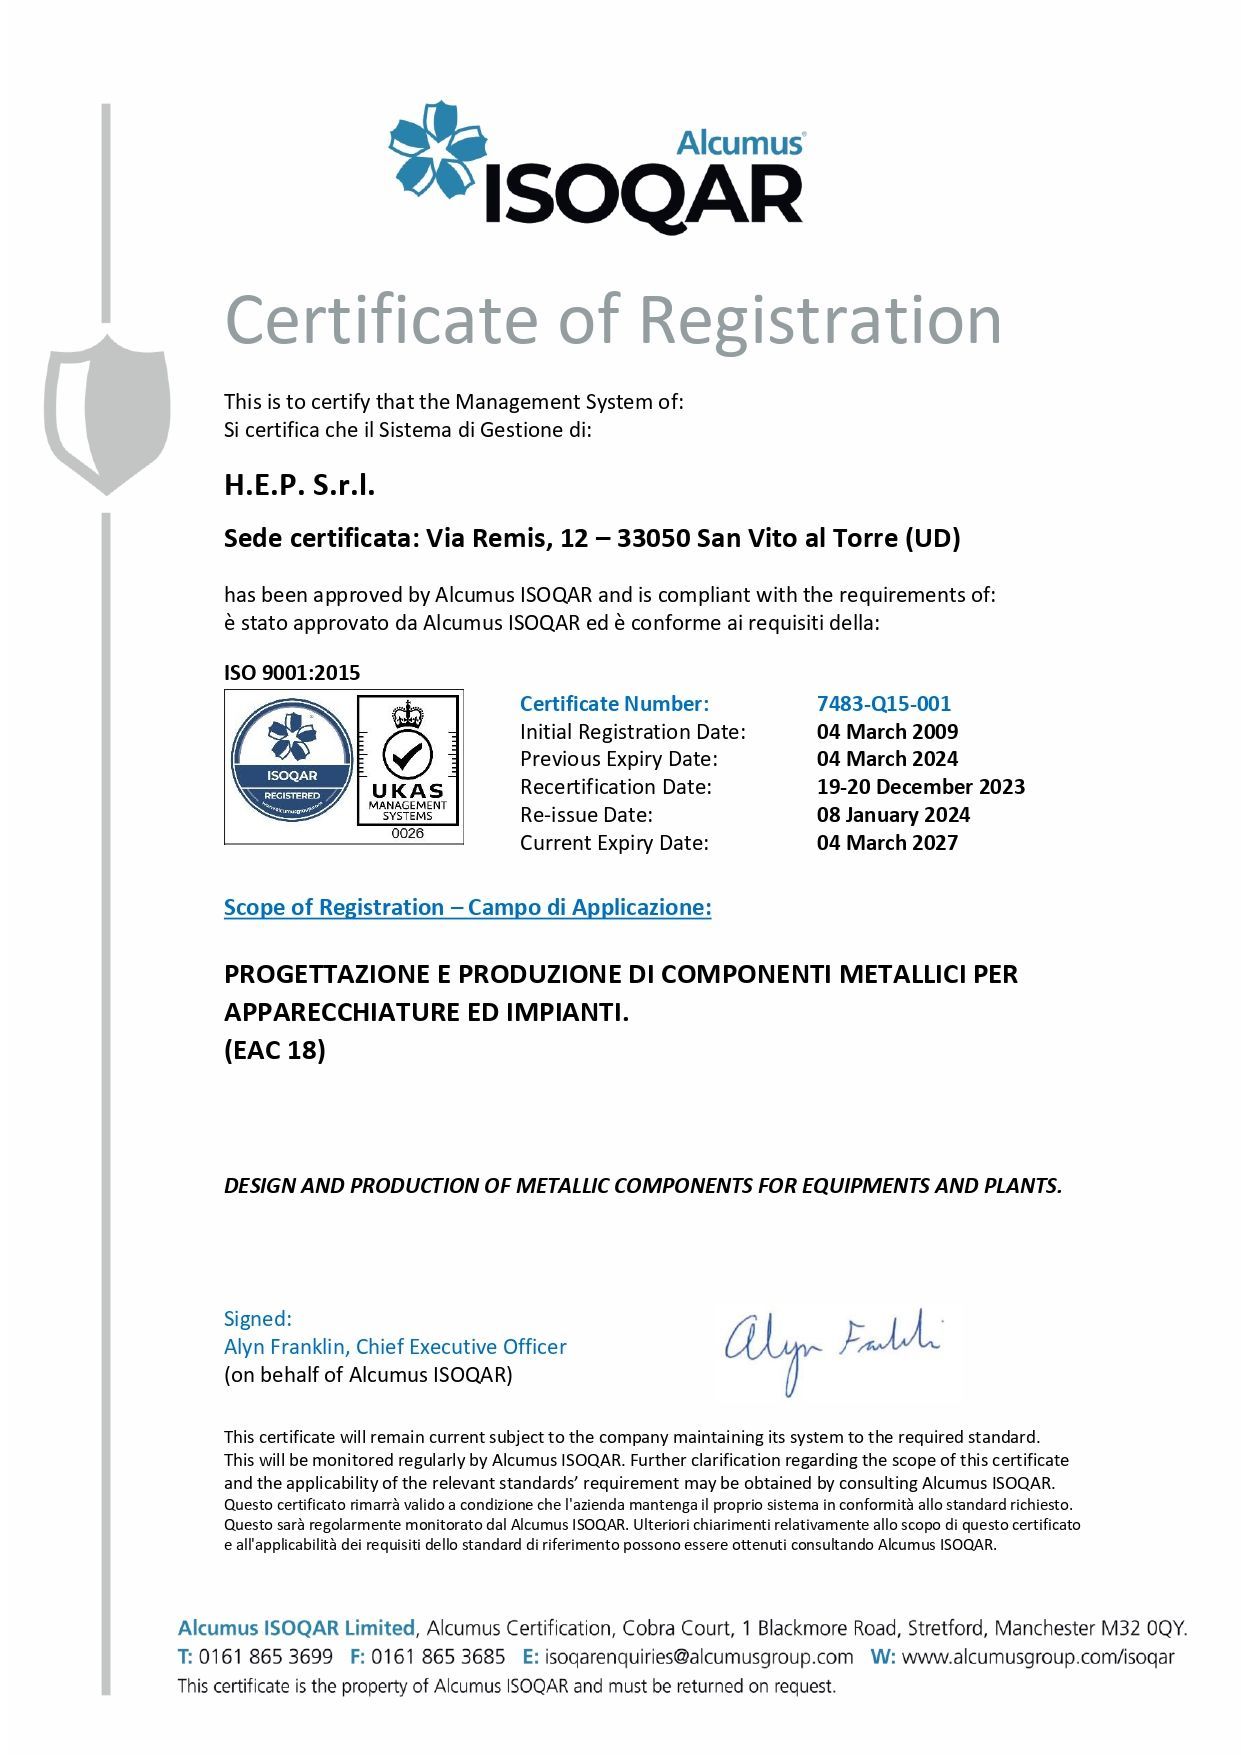 ISOQAR certificazione